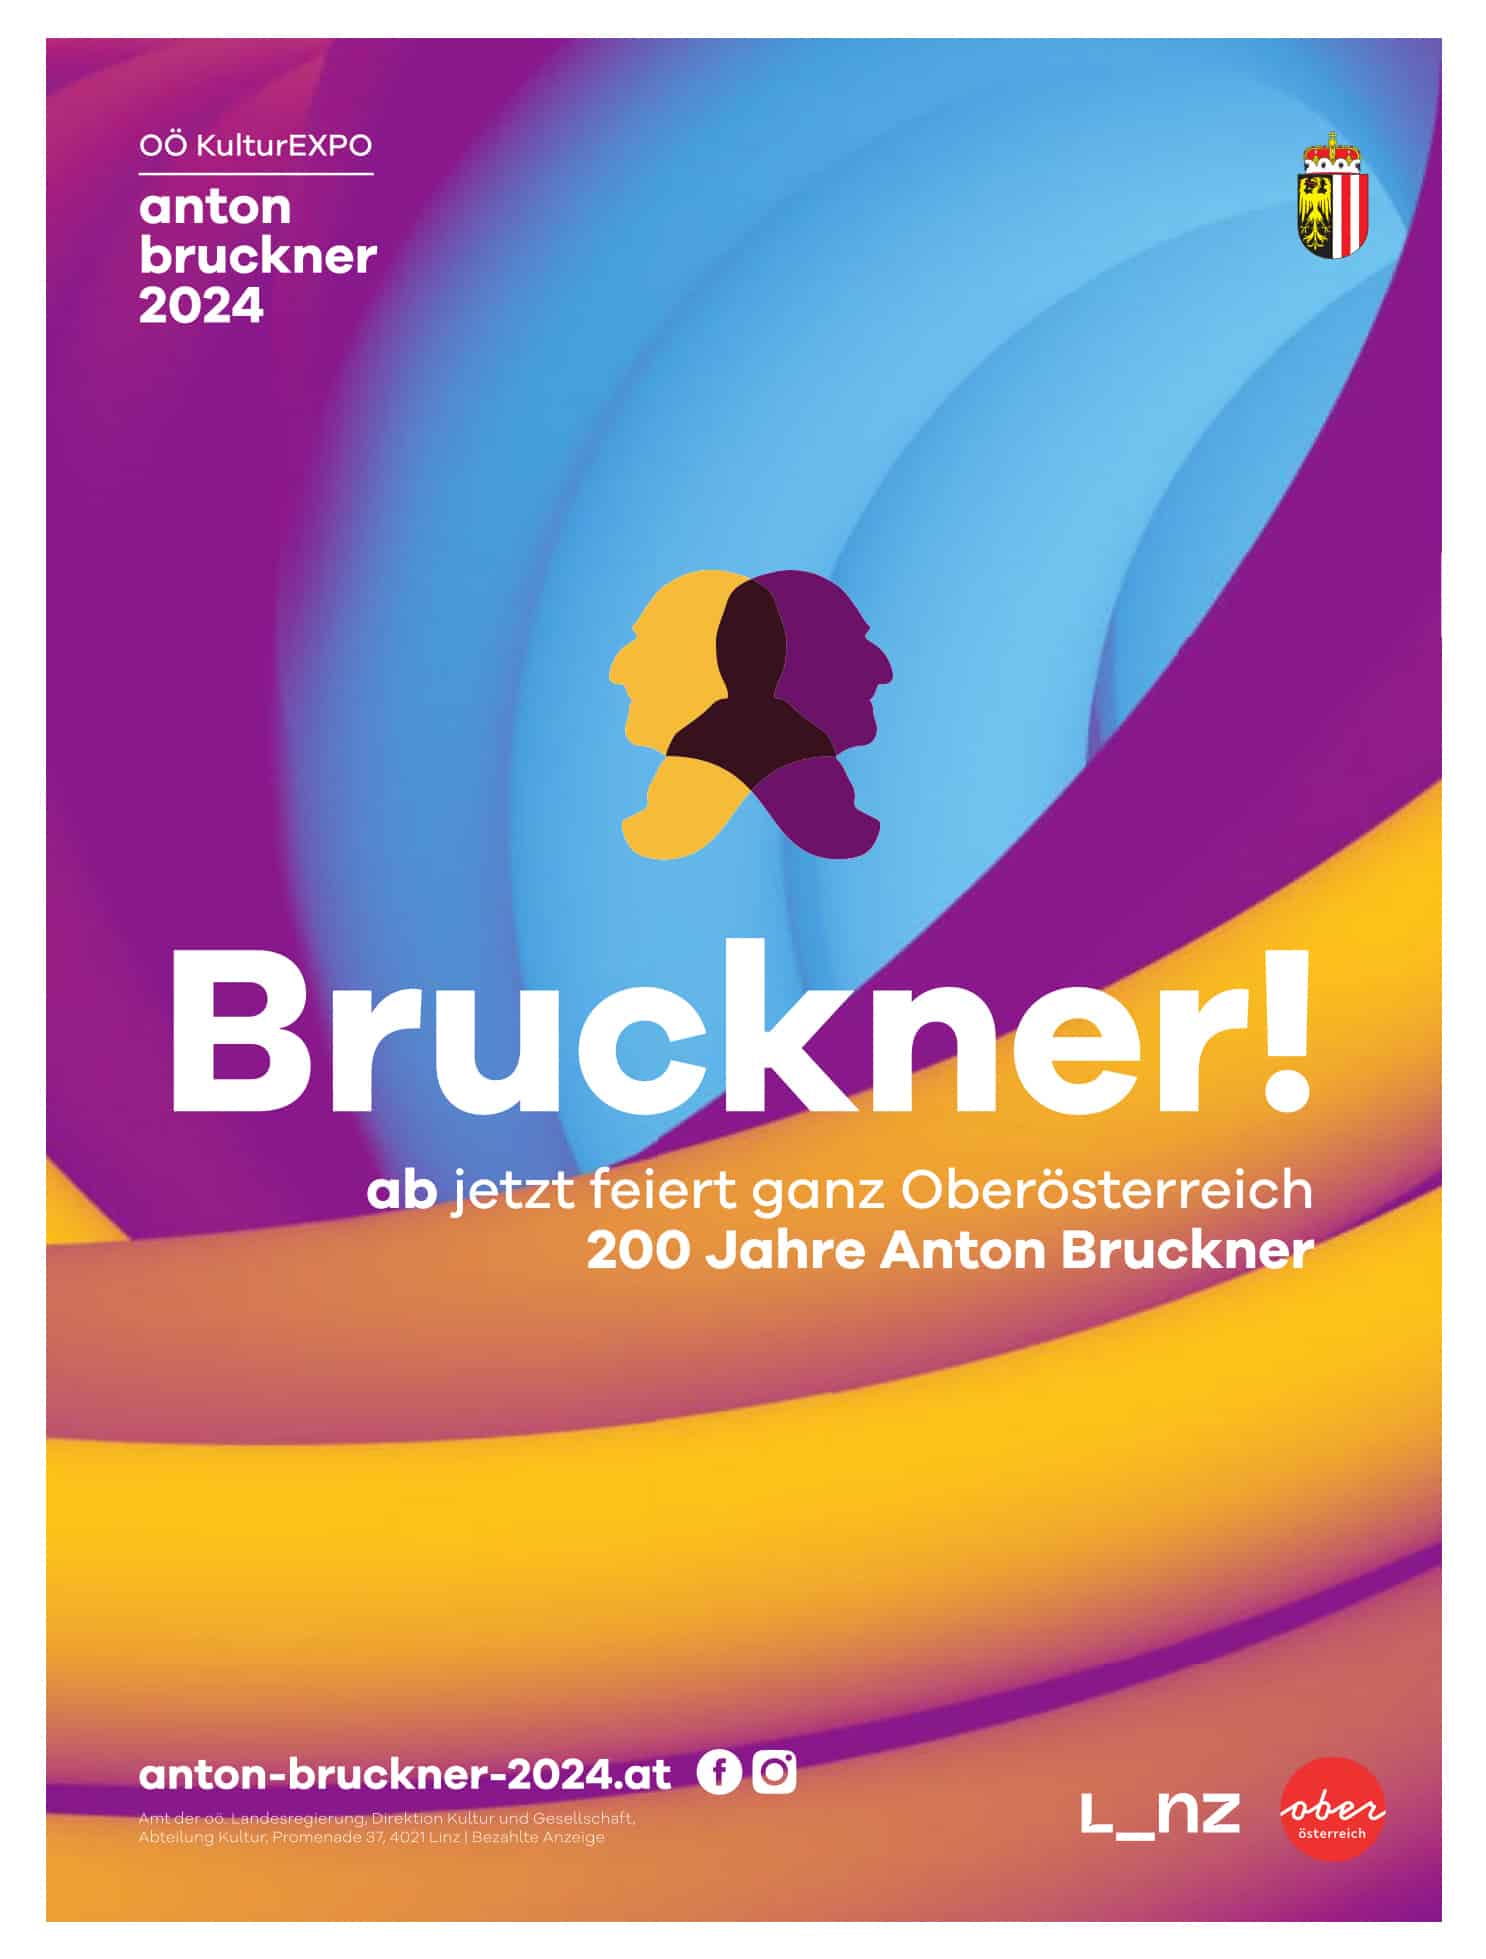 Our tourist magnet is…. Anton Bruckner